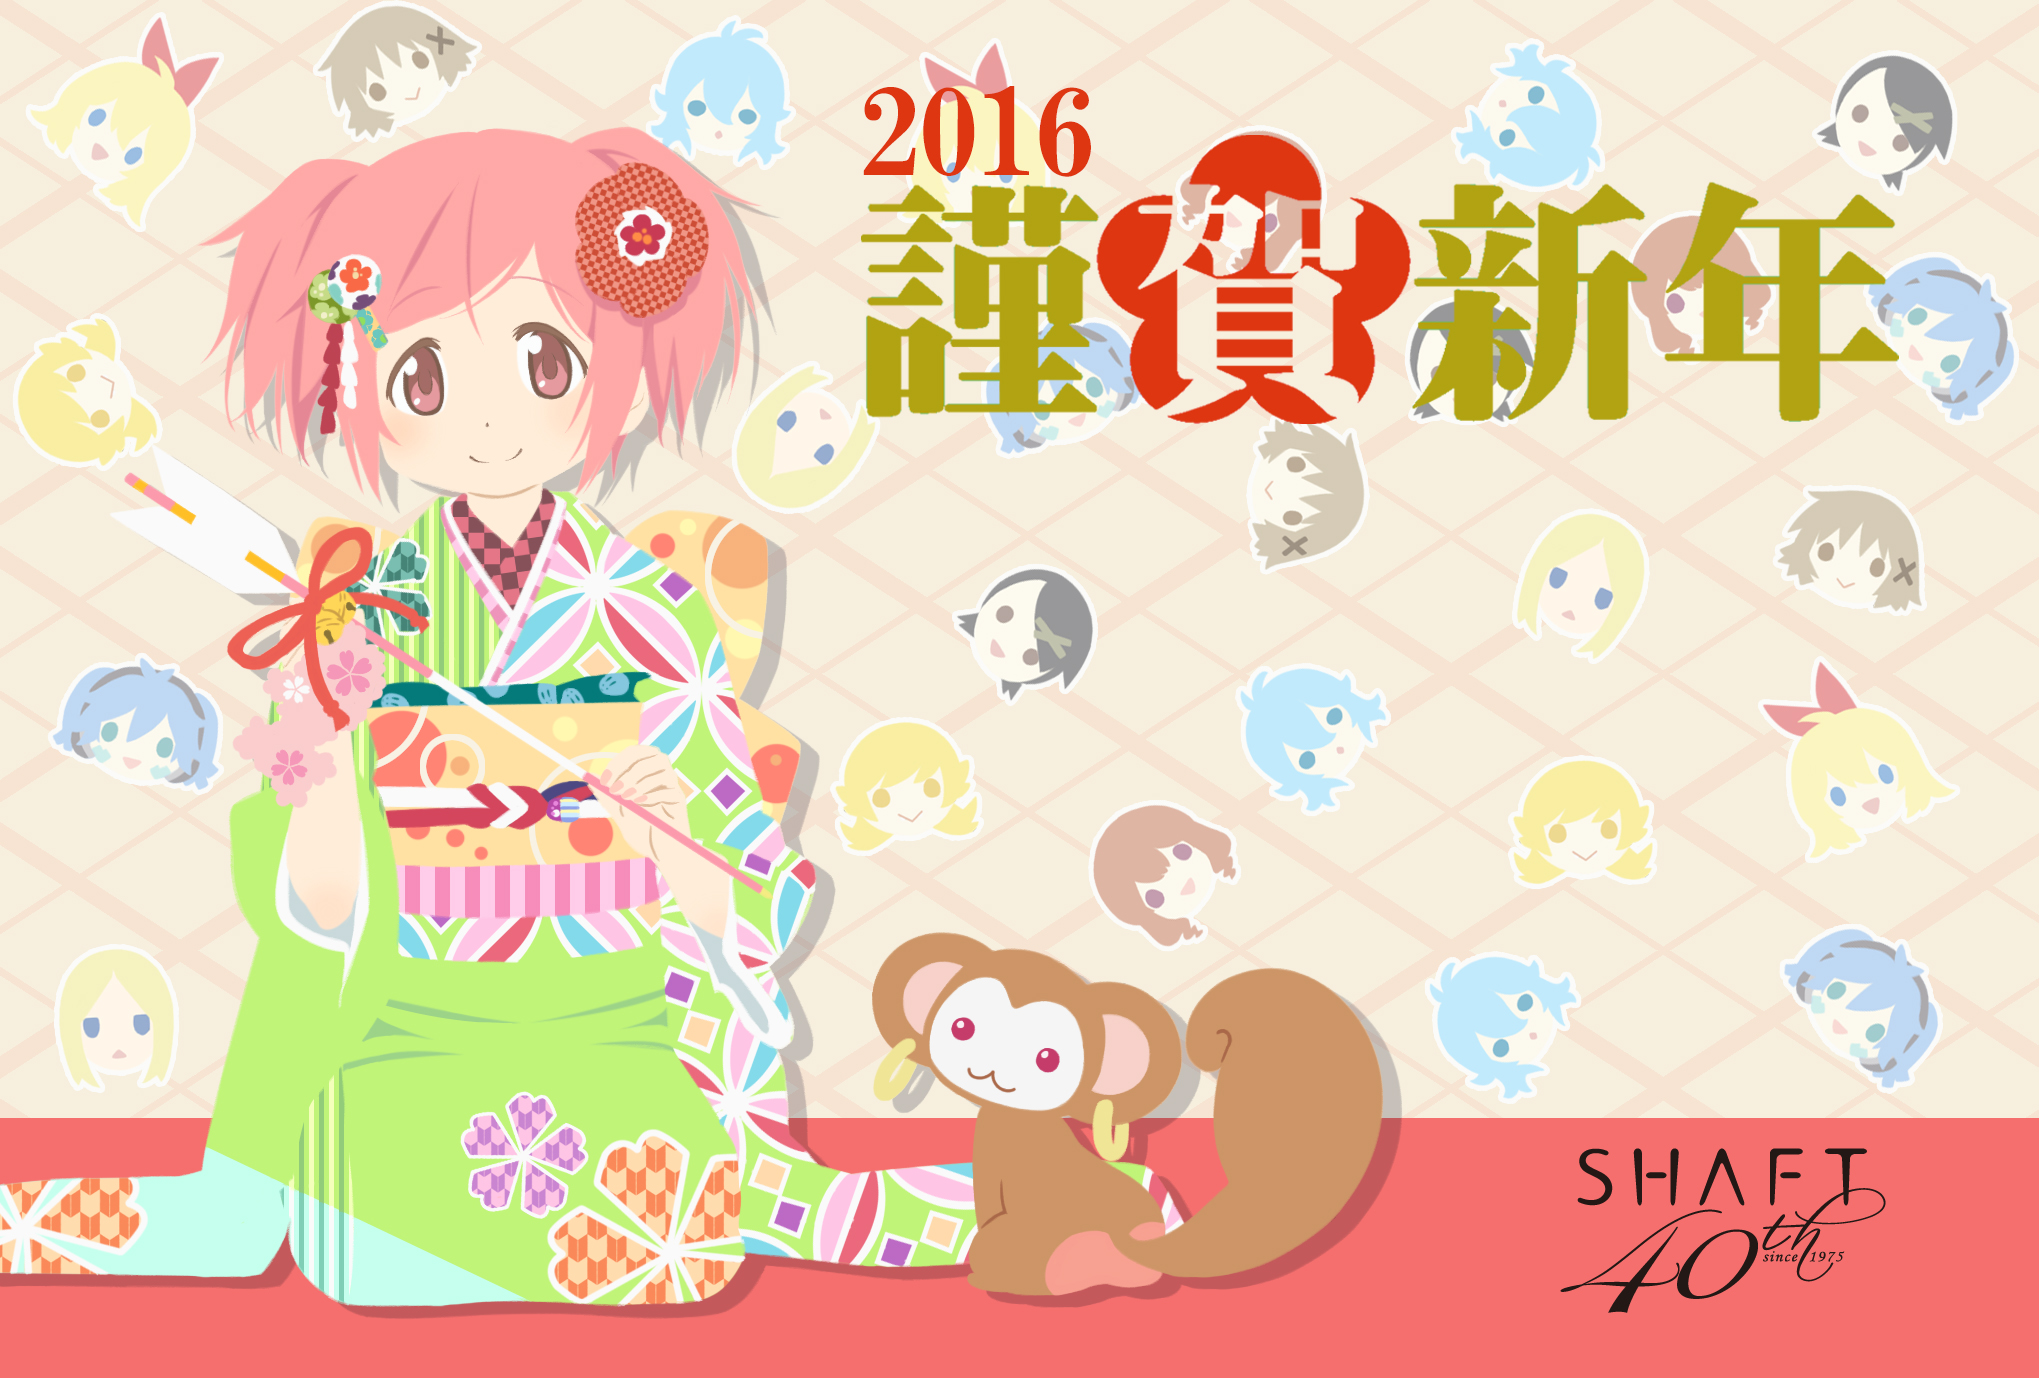 The Mahou Shoujo Madoka Magica Crew Wish You a Happy New Year